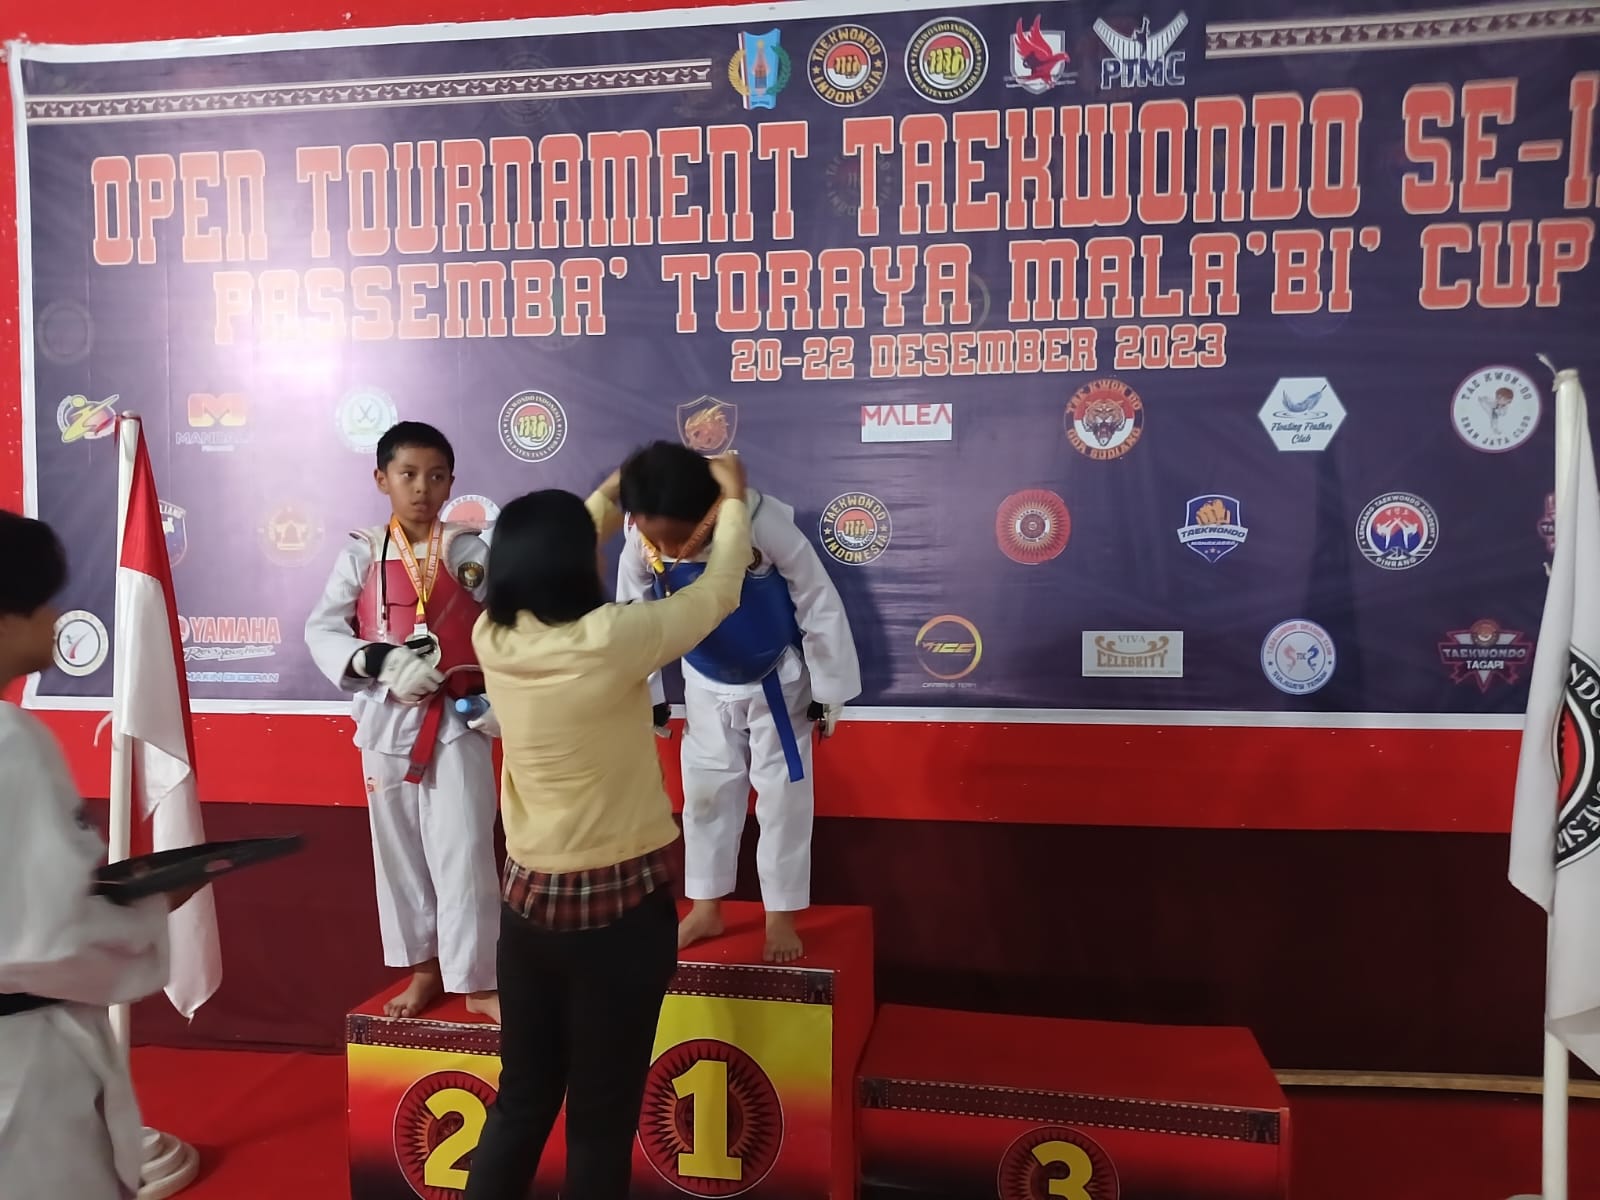 FOTO: SISWA SD Inpres 3 Birobuli, Fhidel saat menerima medali emas pada Open Turnamen Taekwondo se-Indonesia yang dilaksanakan di Toraja, pada Rabu-Jumat (20-22/12/2023). FOTO: IST